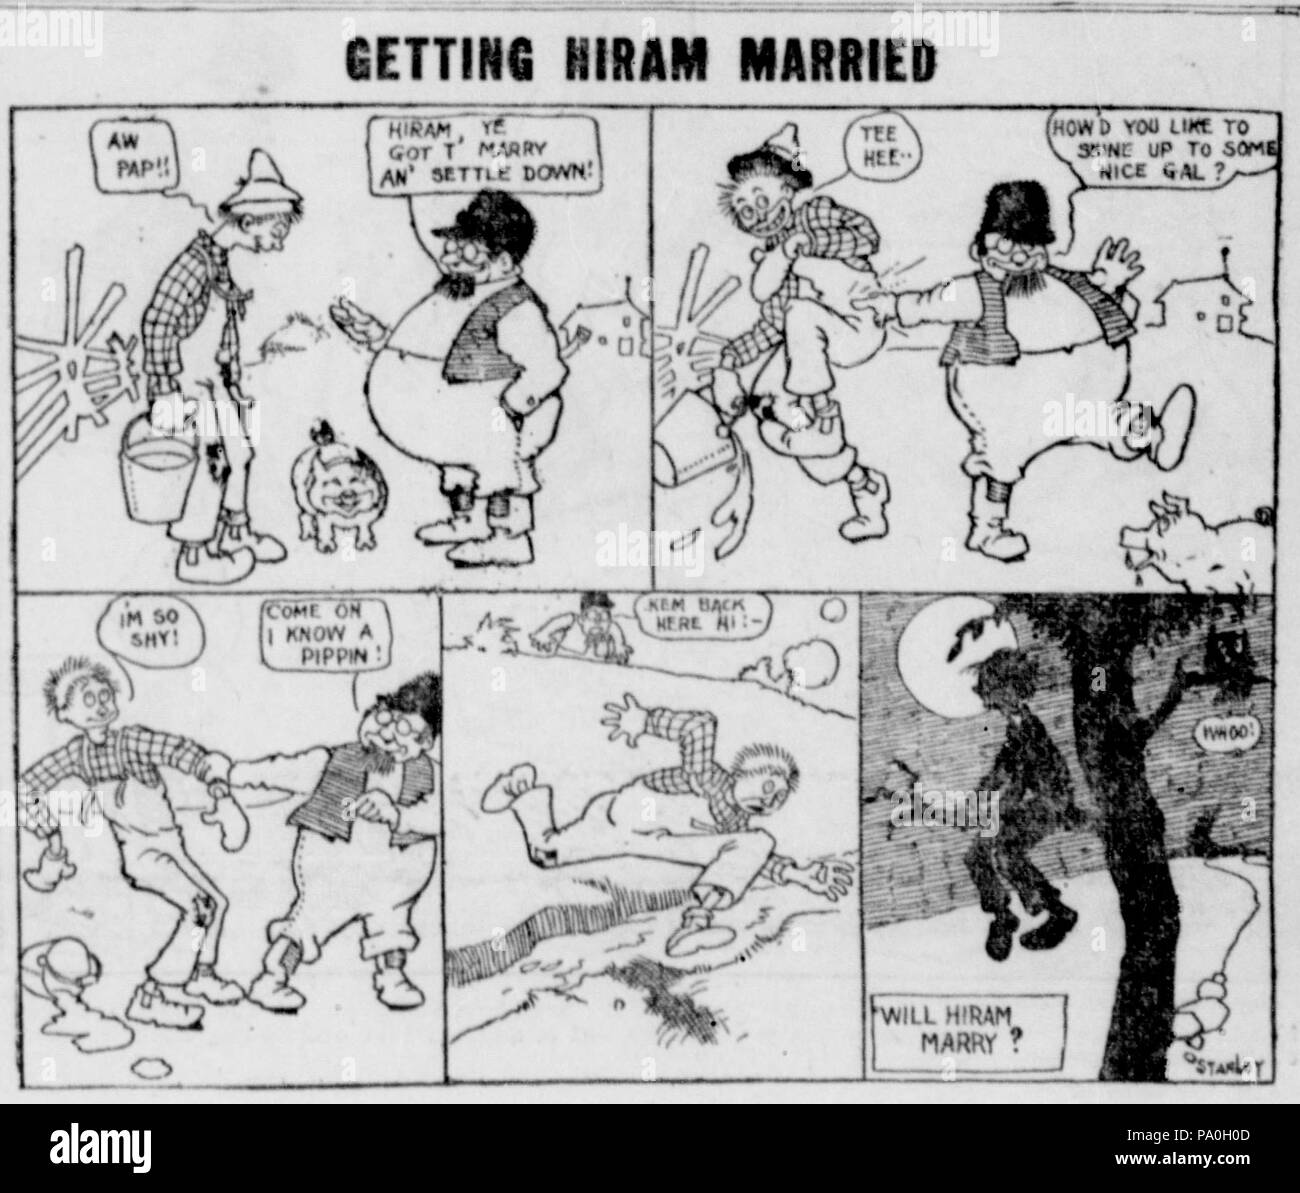 710 Getting Hiram Married (Stanley cartoon) Stock Photo